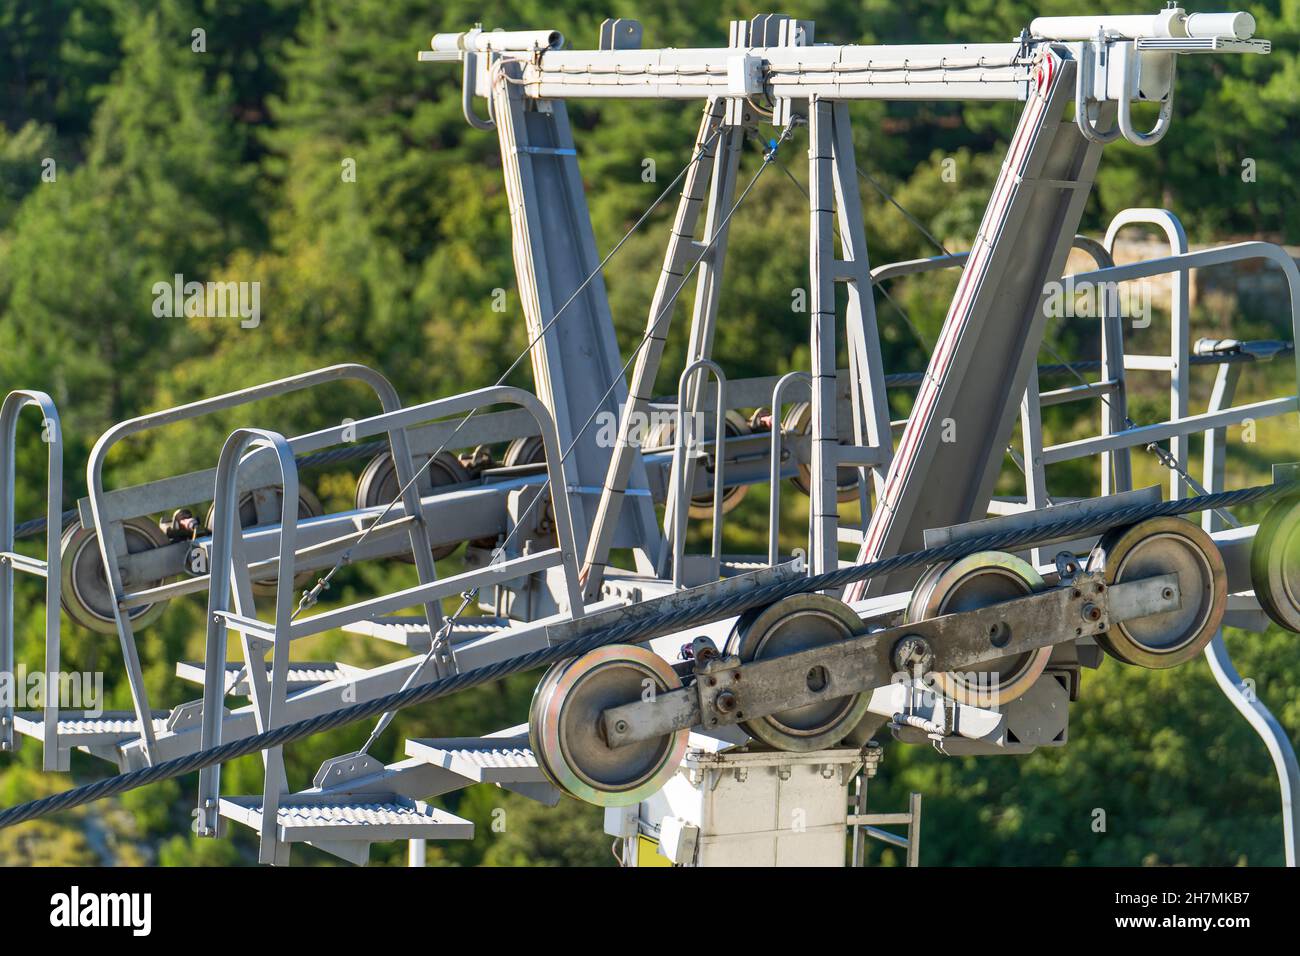 Rollerskilift-Seilsystem. Seilbahn oder Seilbahn oder Seilbahn in den Bergen. Stockfoto